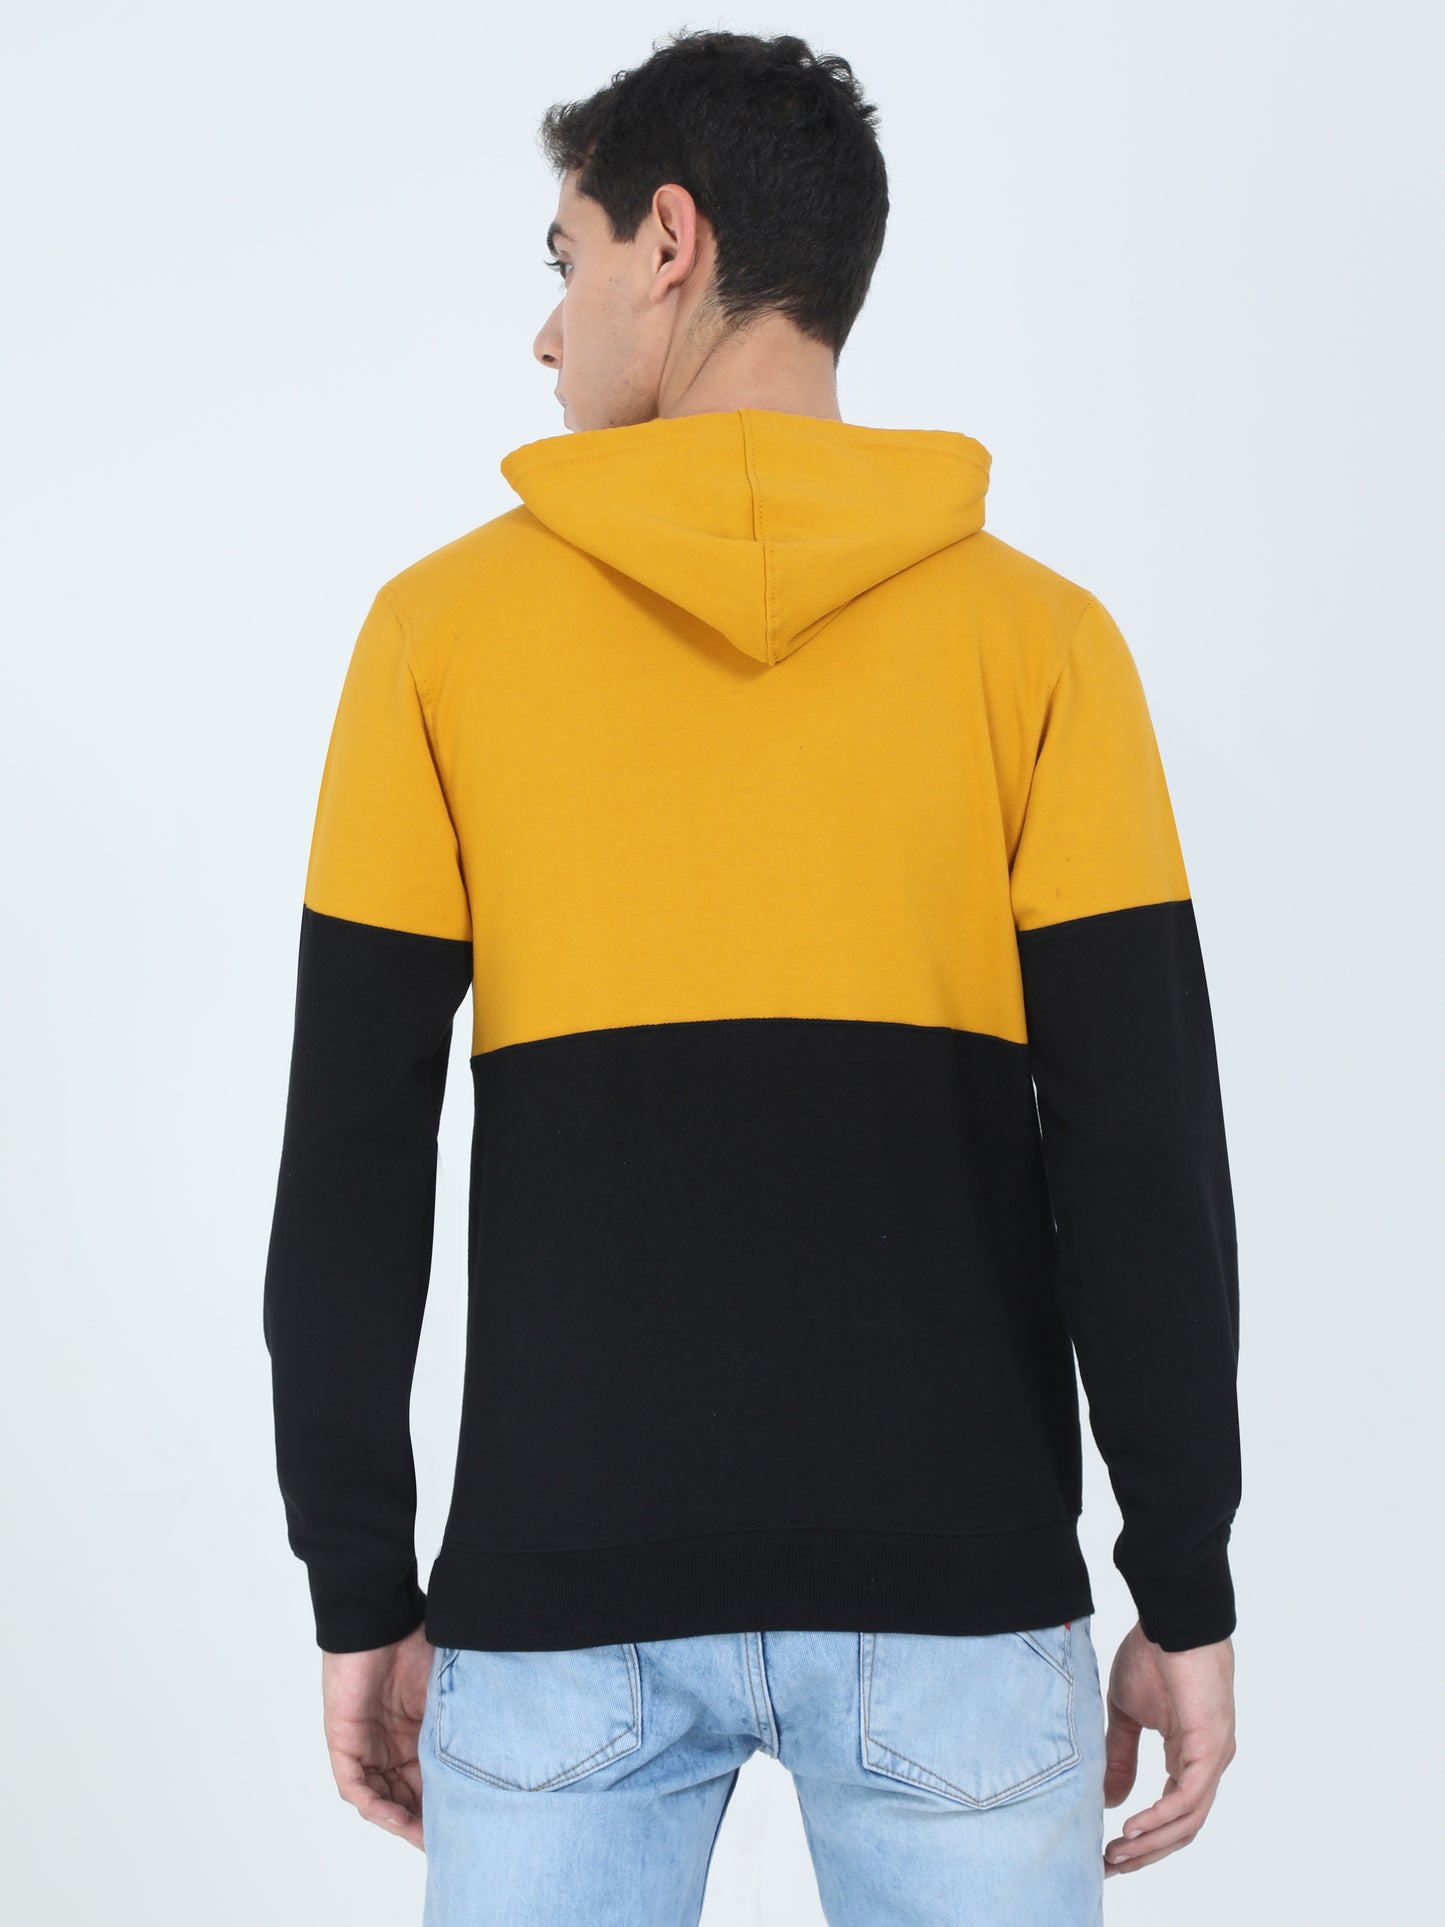 Men's Cotton Printed Mustardblack Sweatshirt/Hoodies